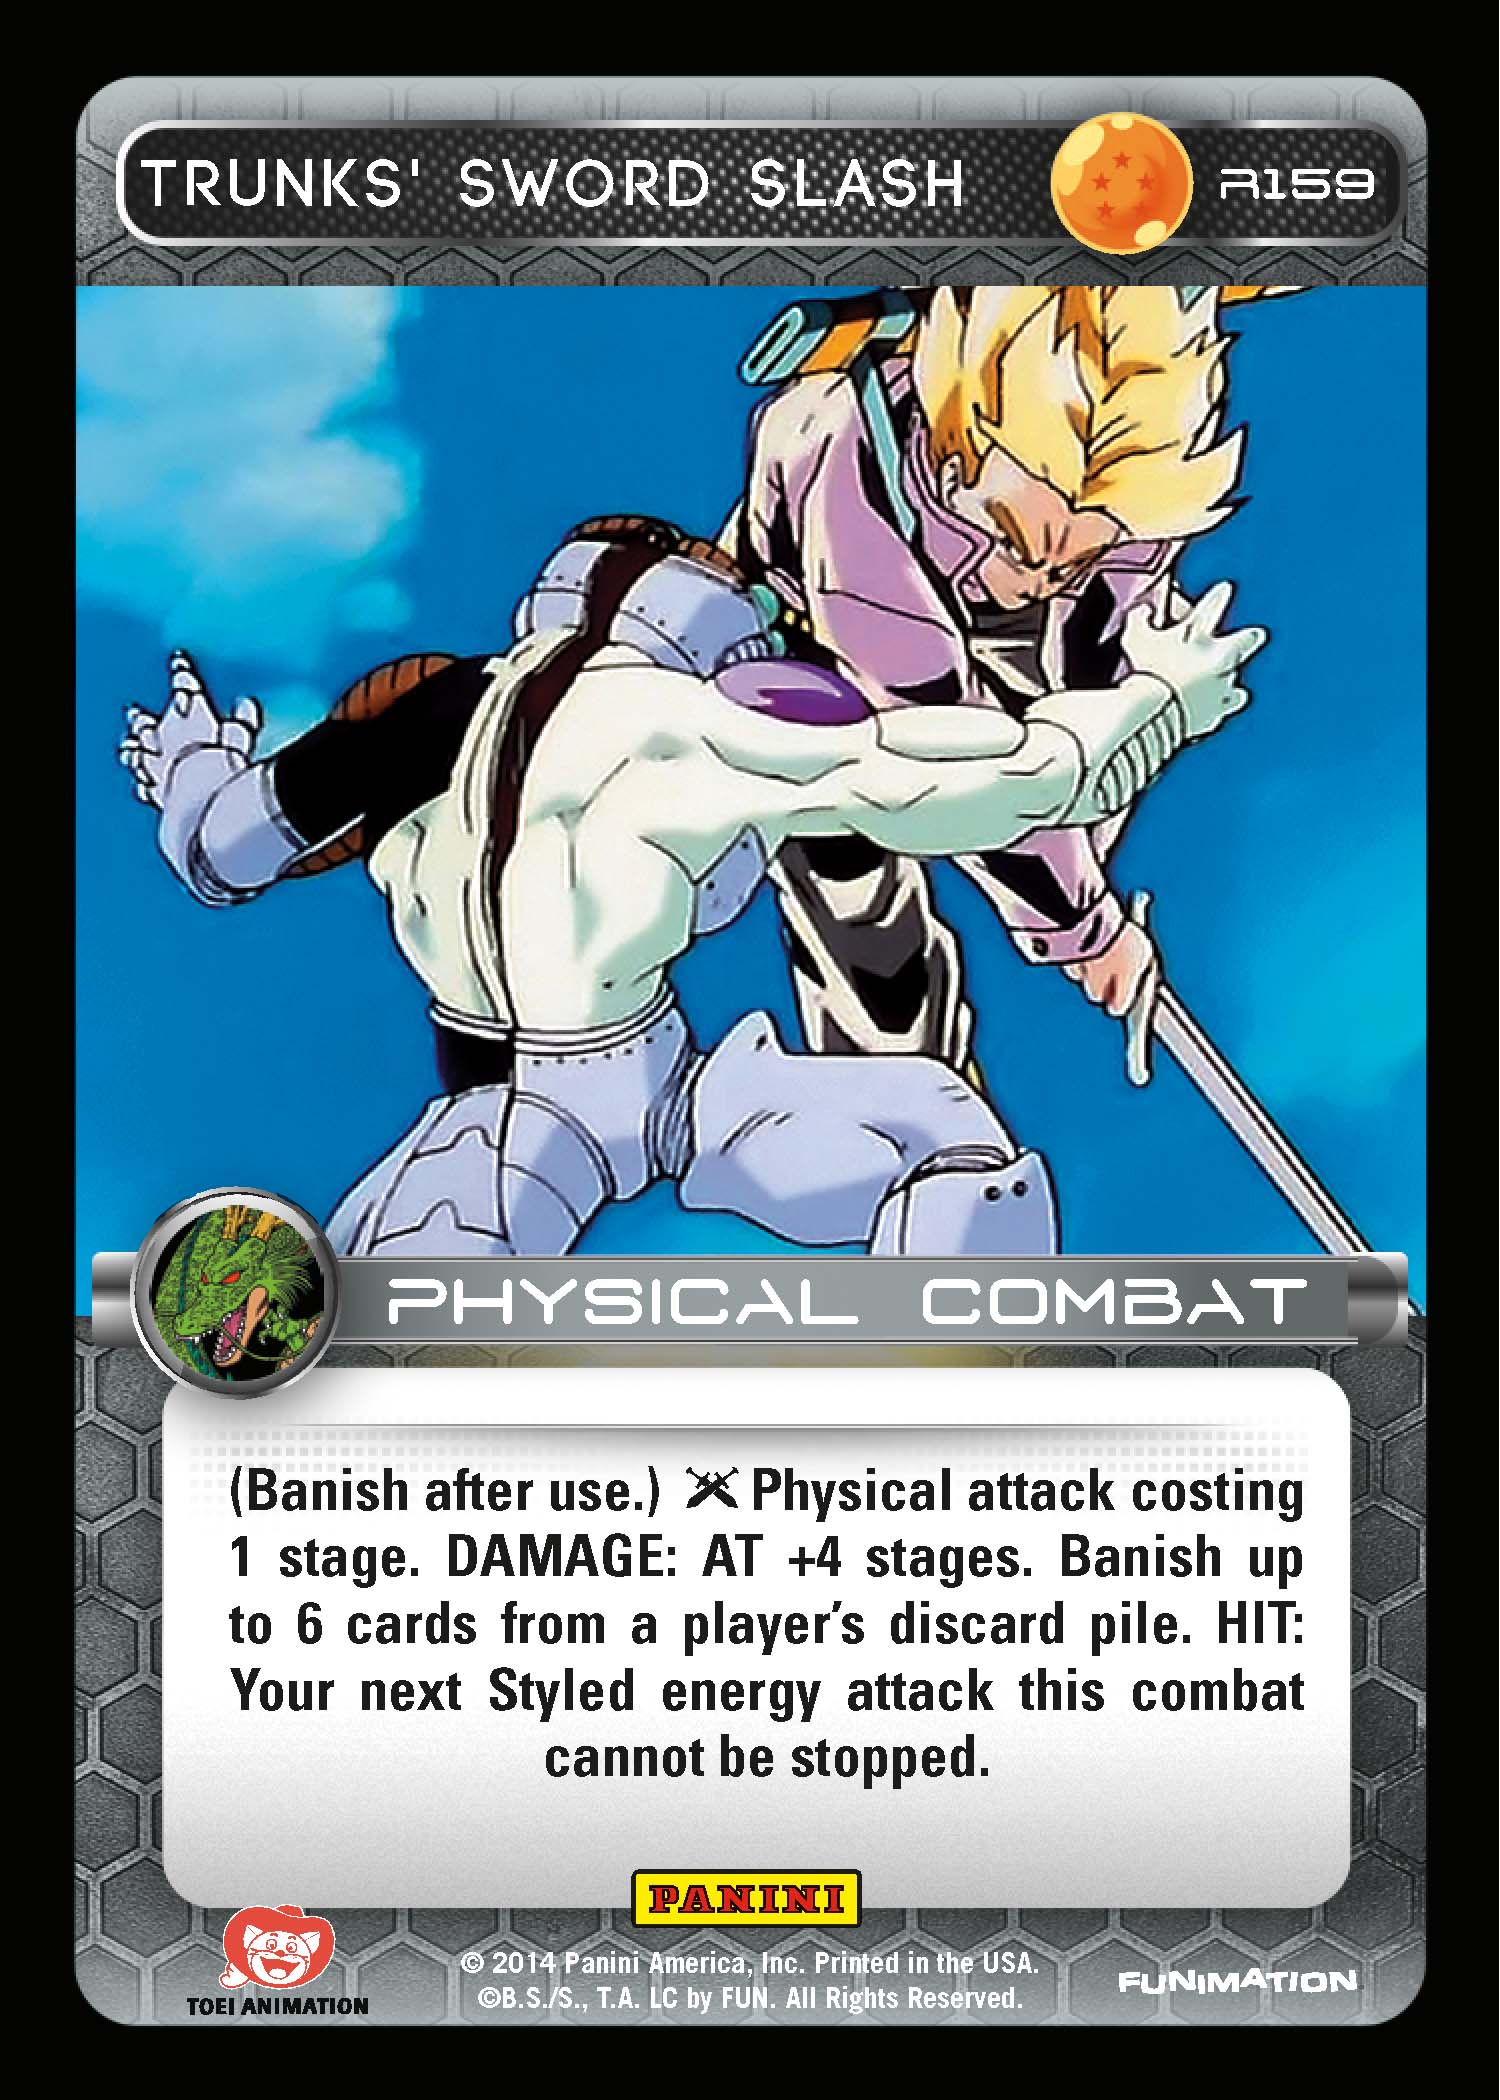 A Legend Returns: Panini America Bringing Back Popular Dragon Ball Z Card  Game – The Knight's Lance